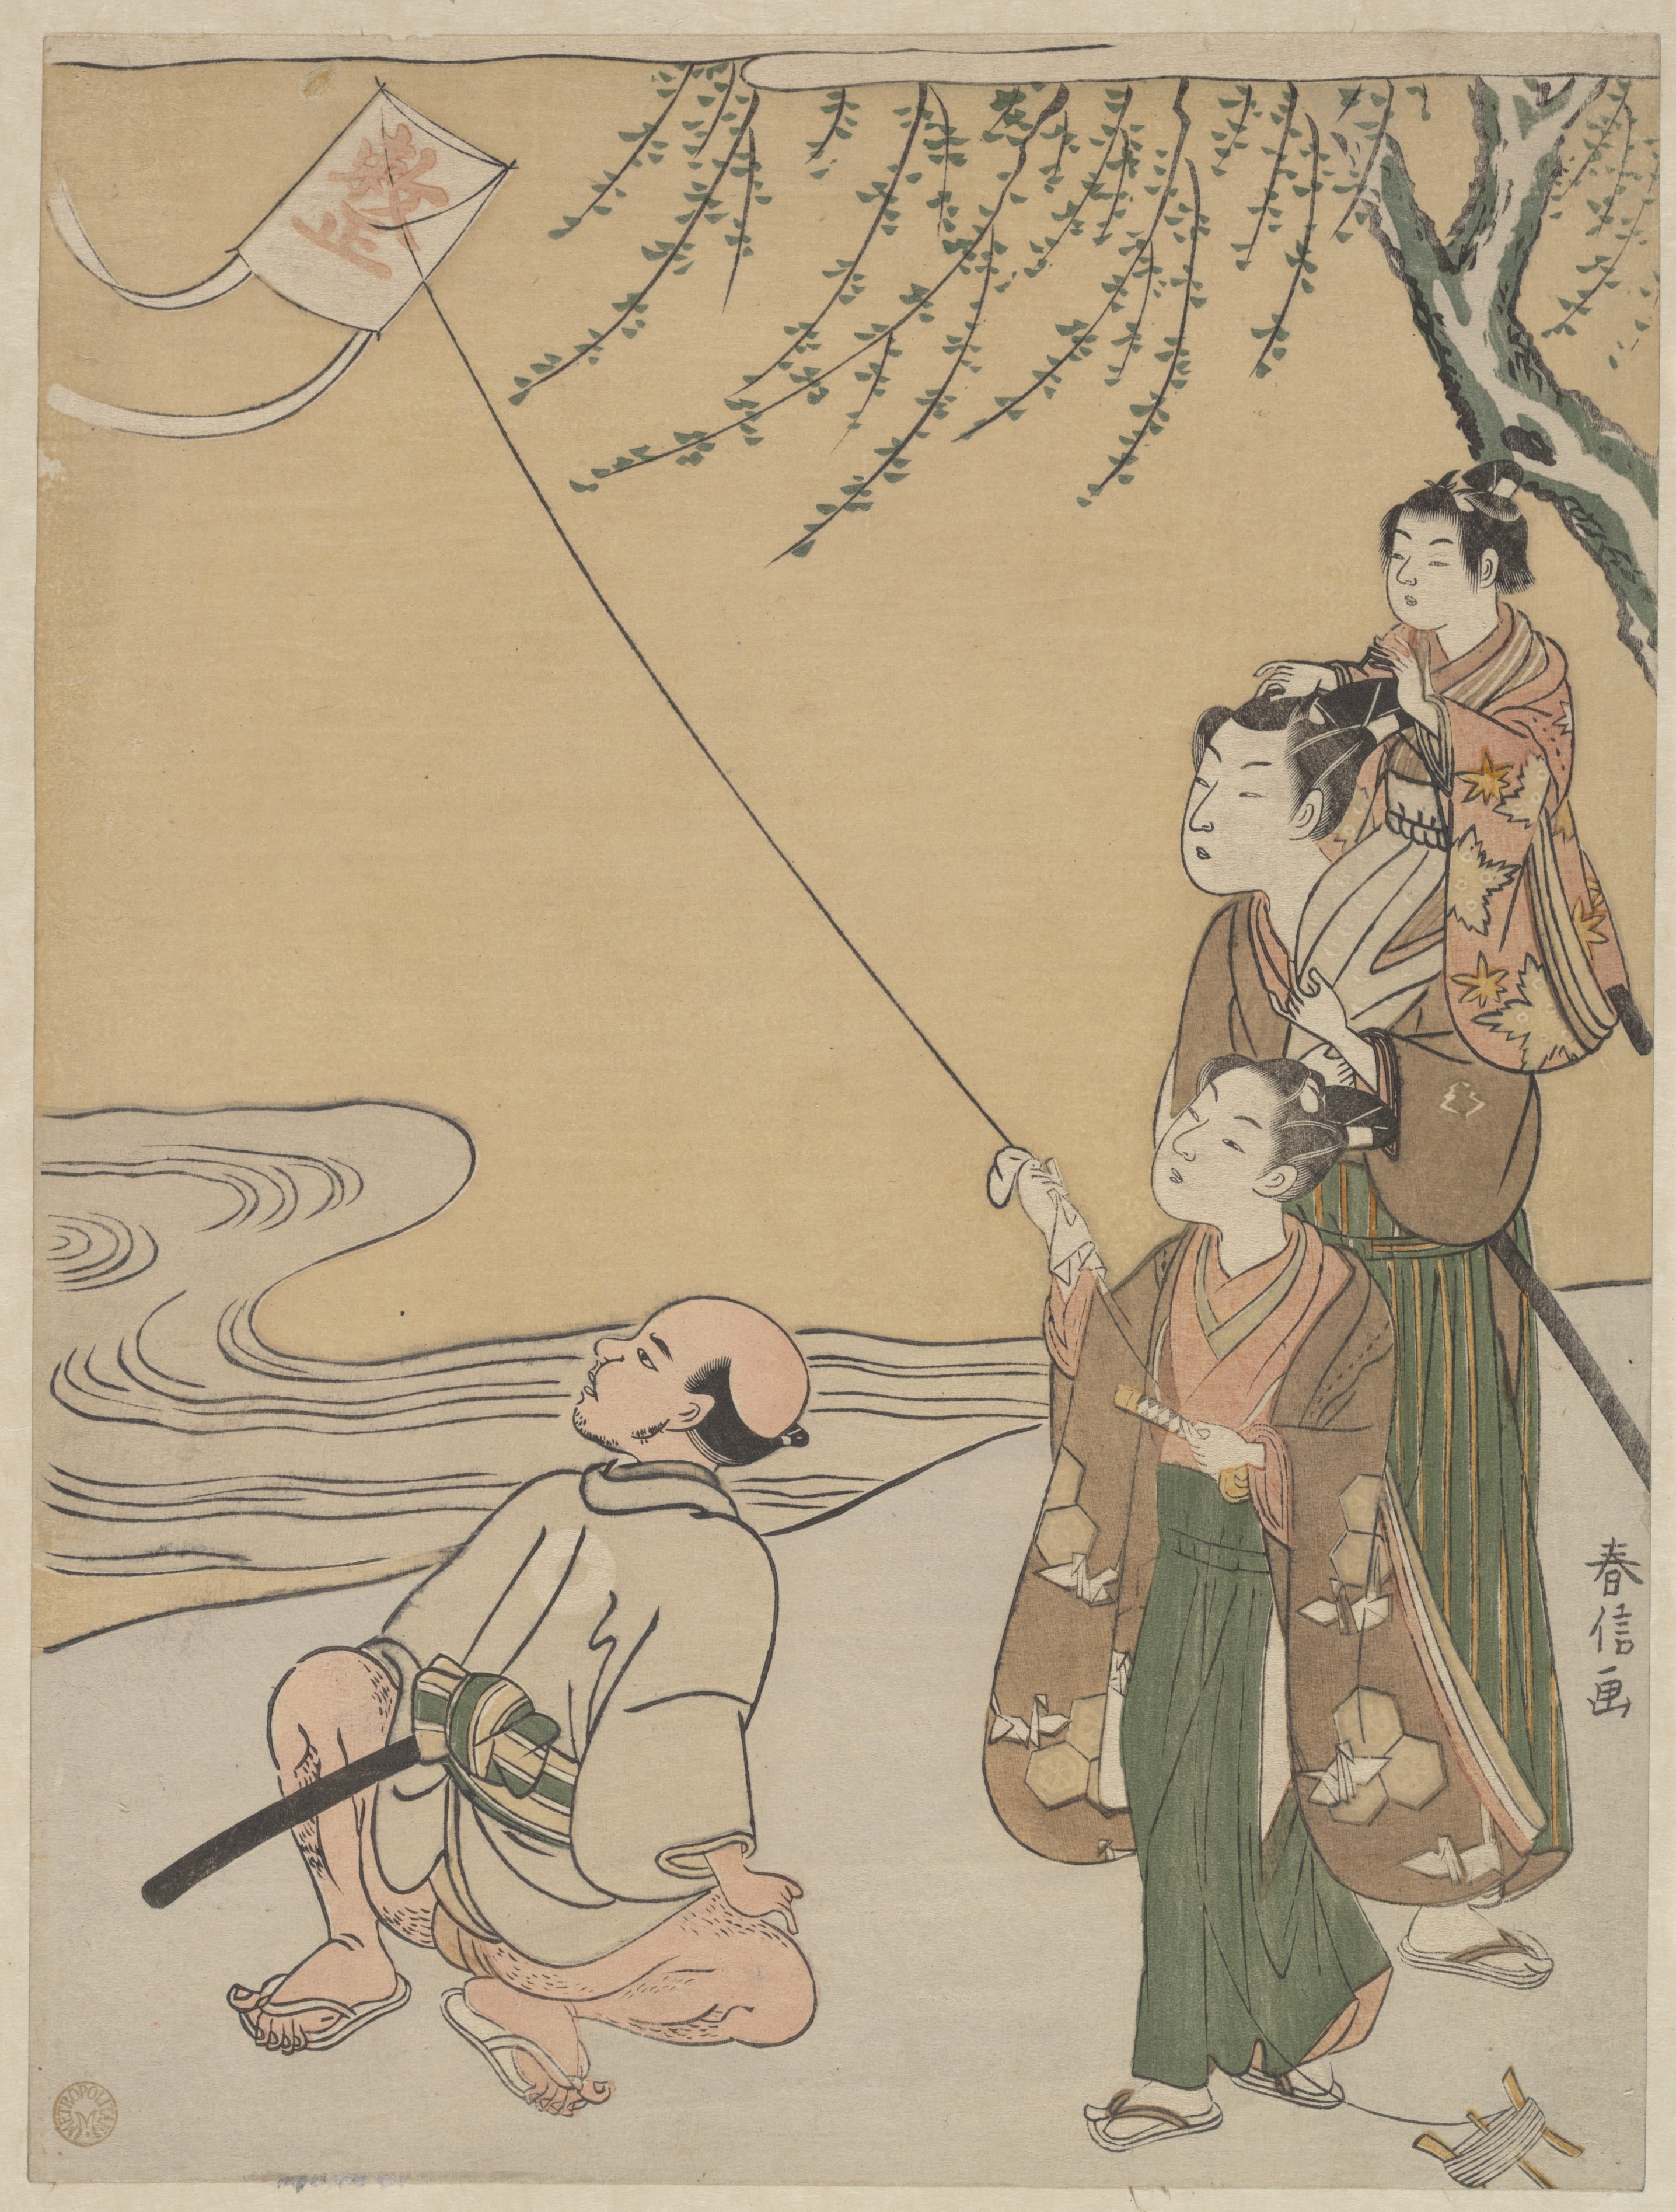 Kite Flying by Suzuki Harunobu - 1766 - 27.3 x 20.6 cm Metropolitan Museum of Art